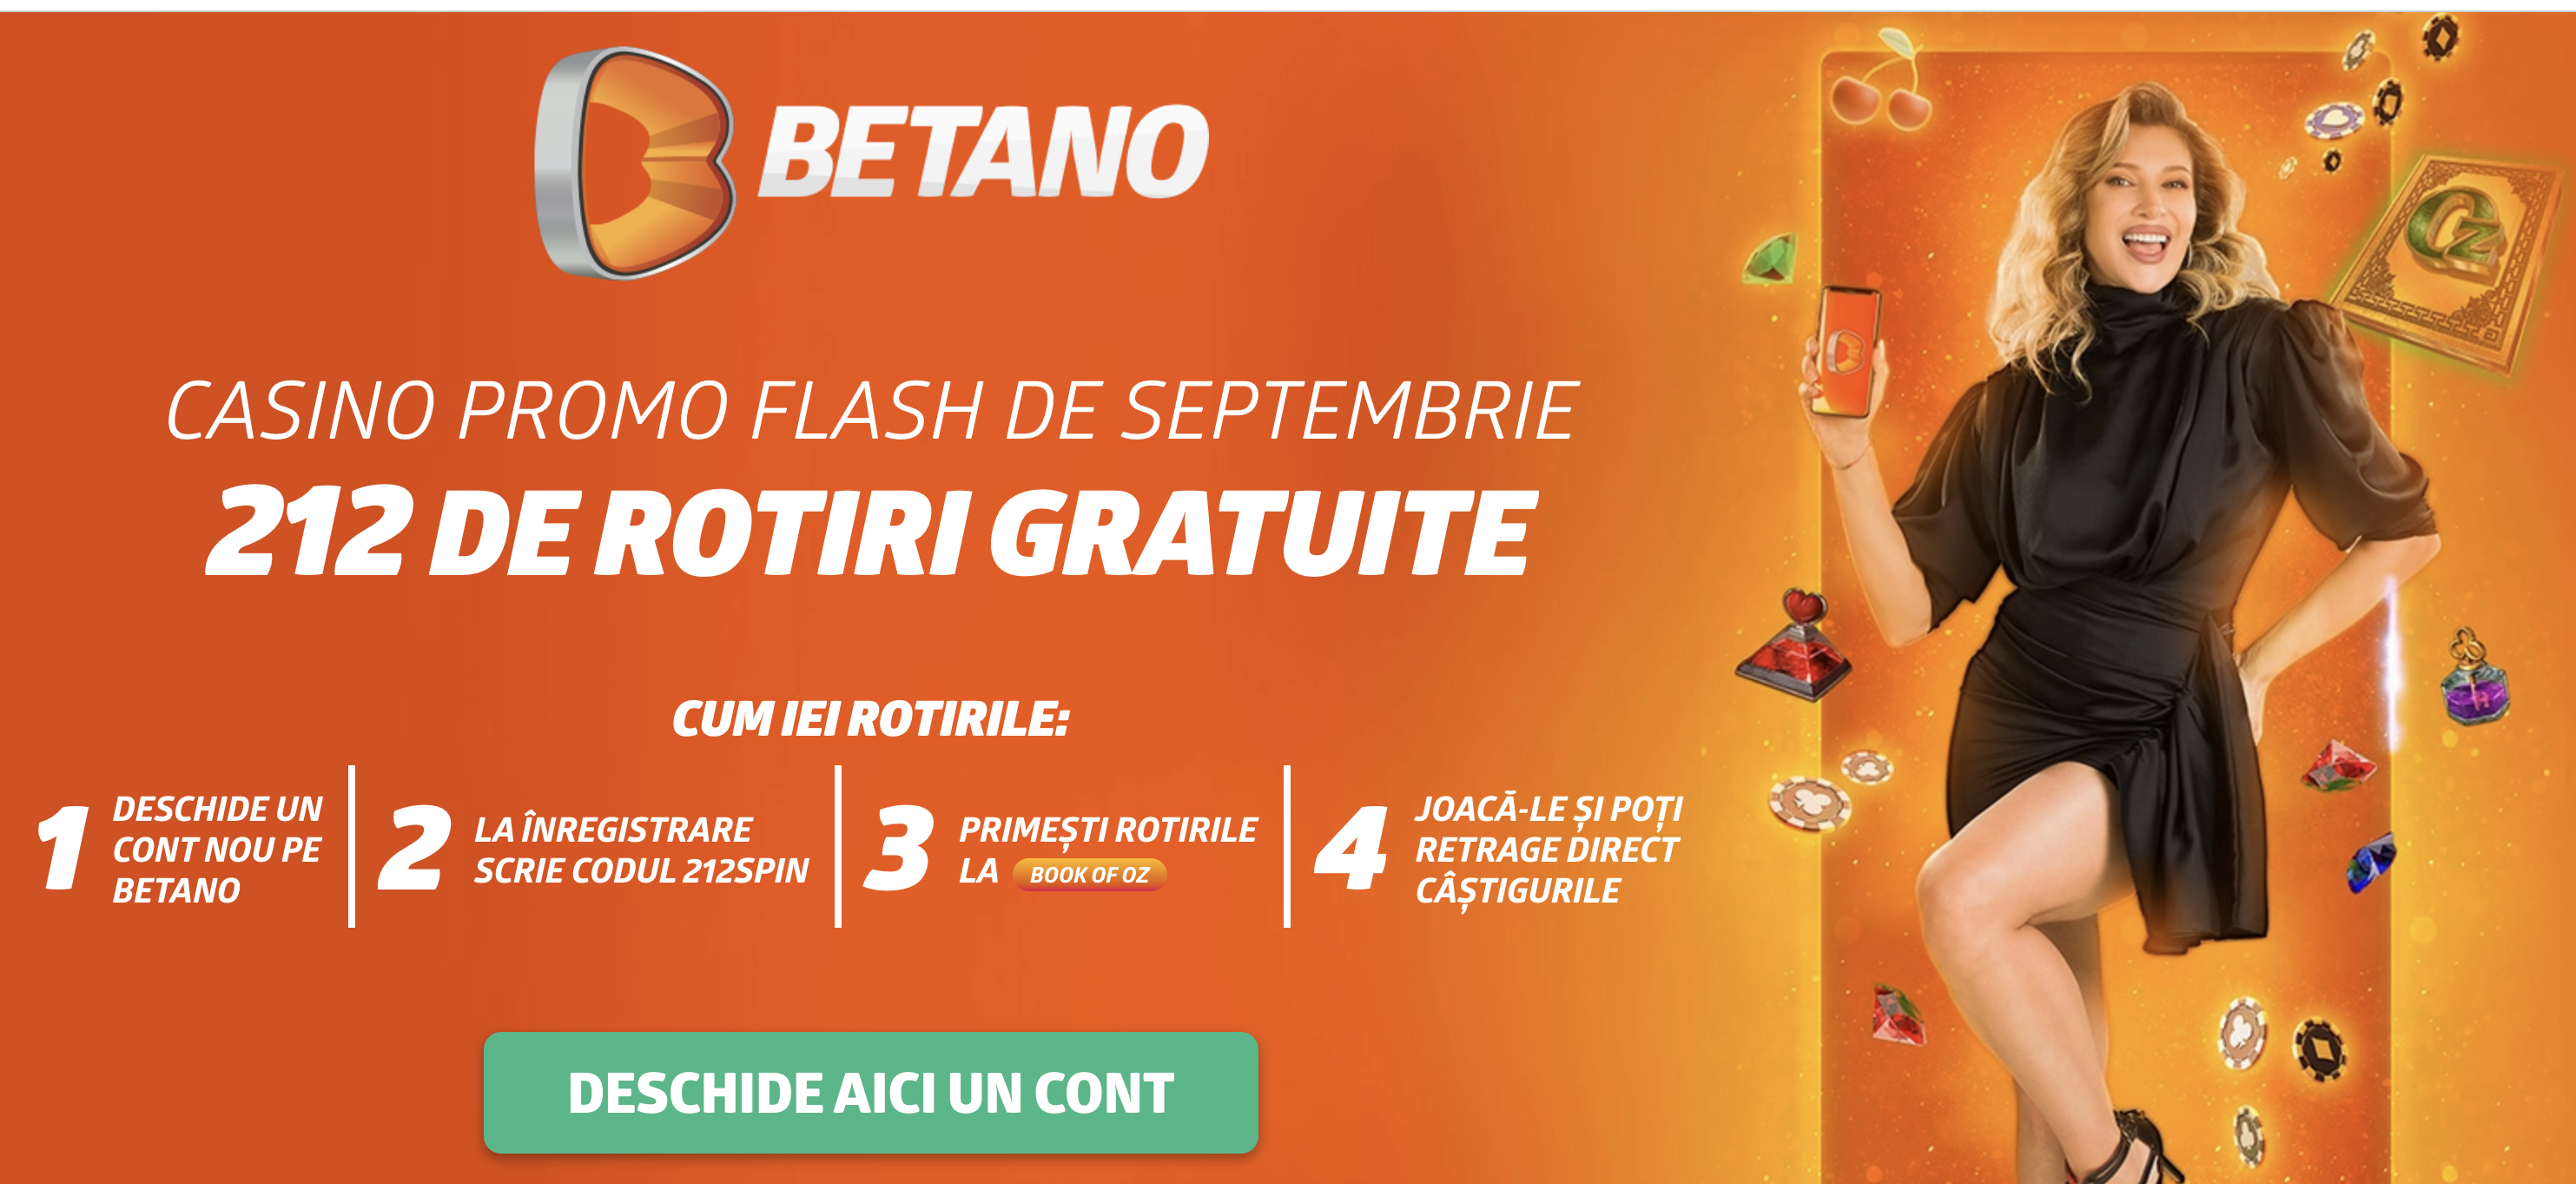 Betano – Super Promo de septembrie cu 212 rotiri gratuite!